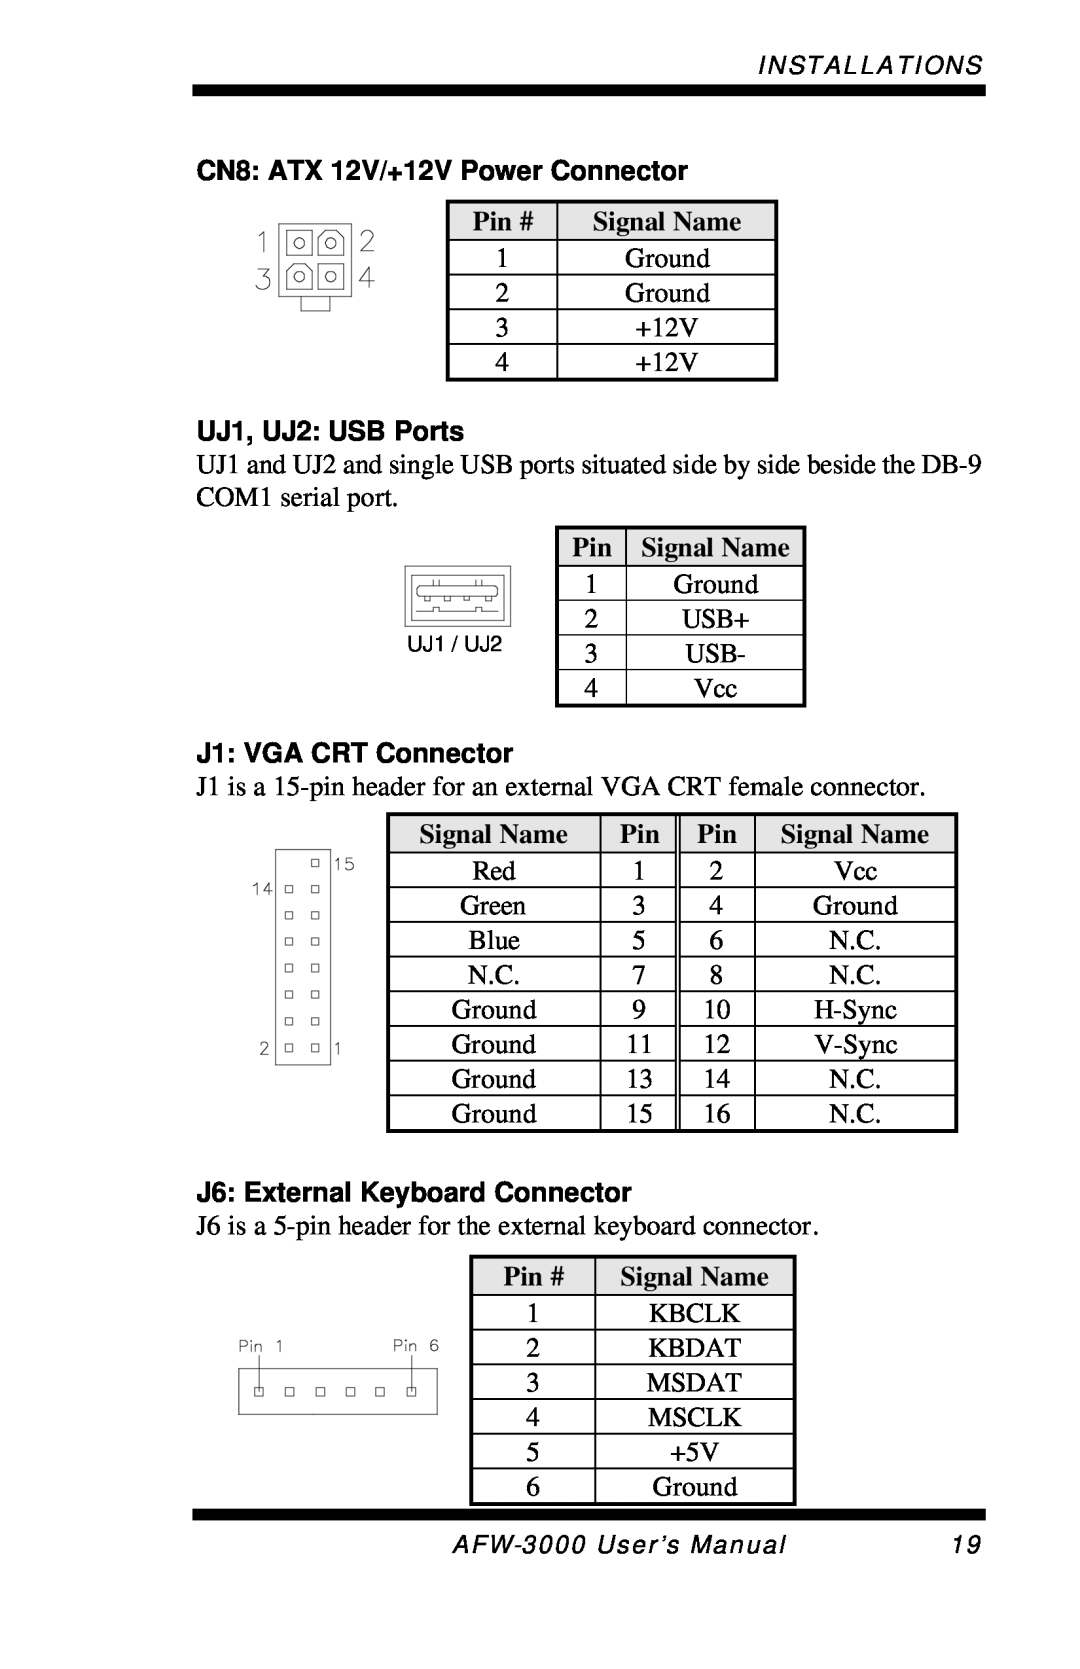 Intel E7501 user manual CN8 ATX 12V/+12V Power Connector, UJ1, UJ2 USB Ports, Pin Signal Name, J1 VGA CRT Connector, Pin # 